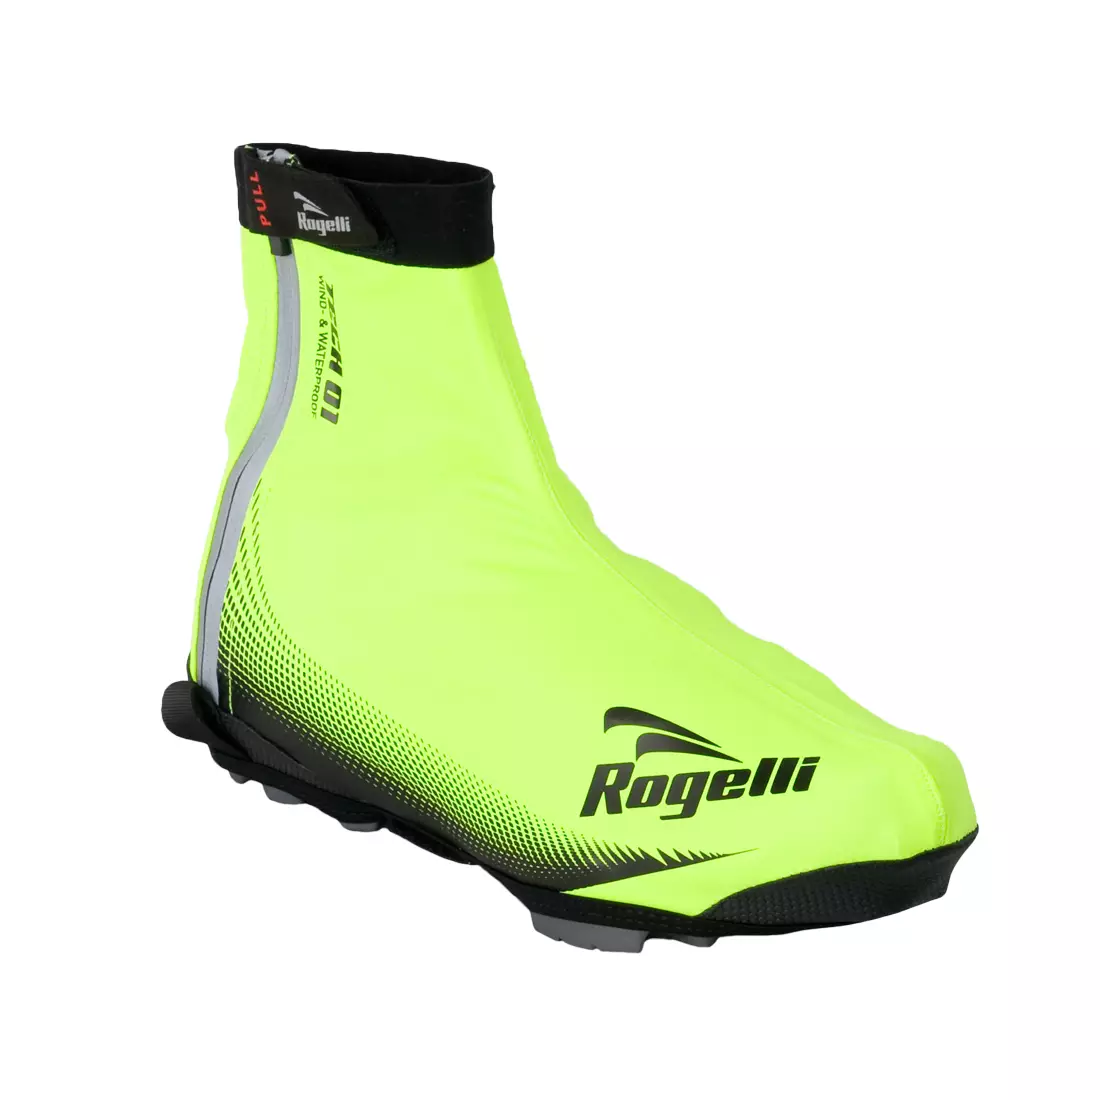 ROGELLI FIANDREX kryty na cyklistickou obuv, barva: Fluor